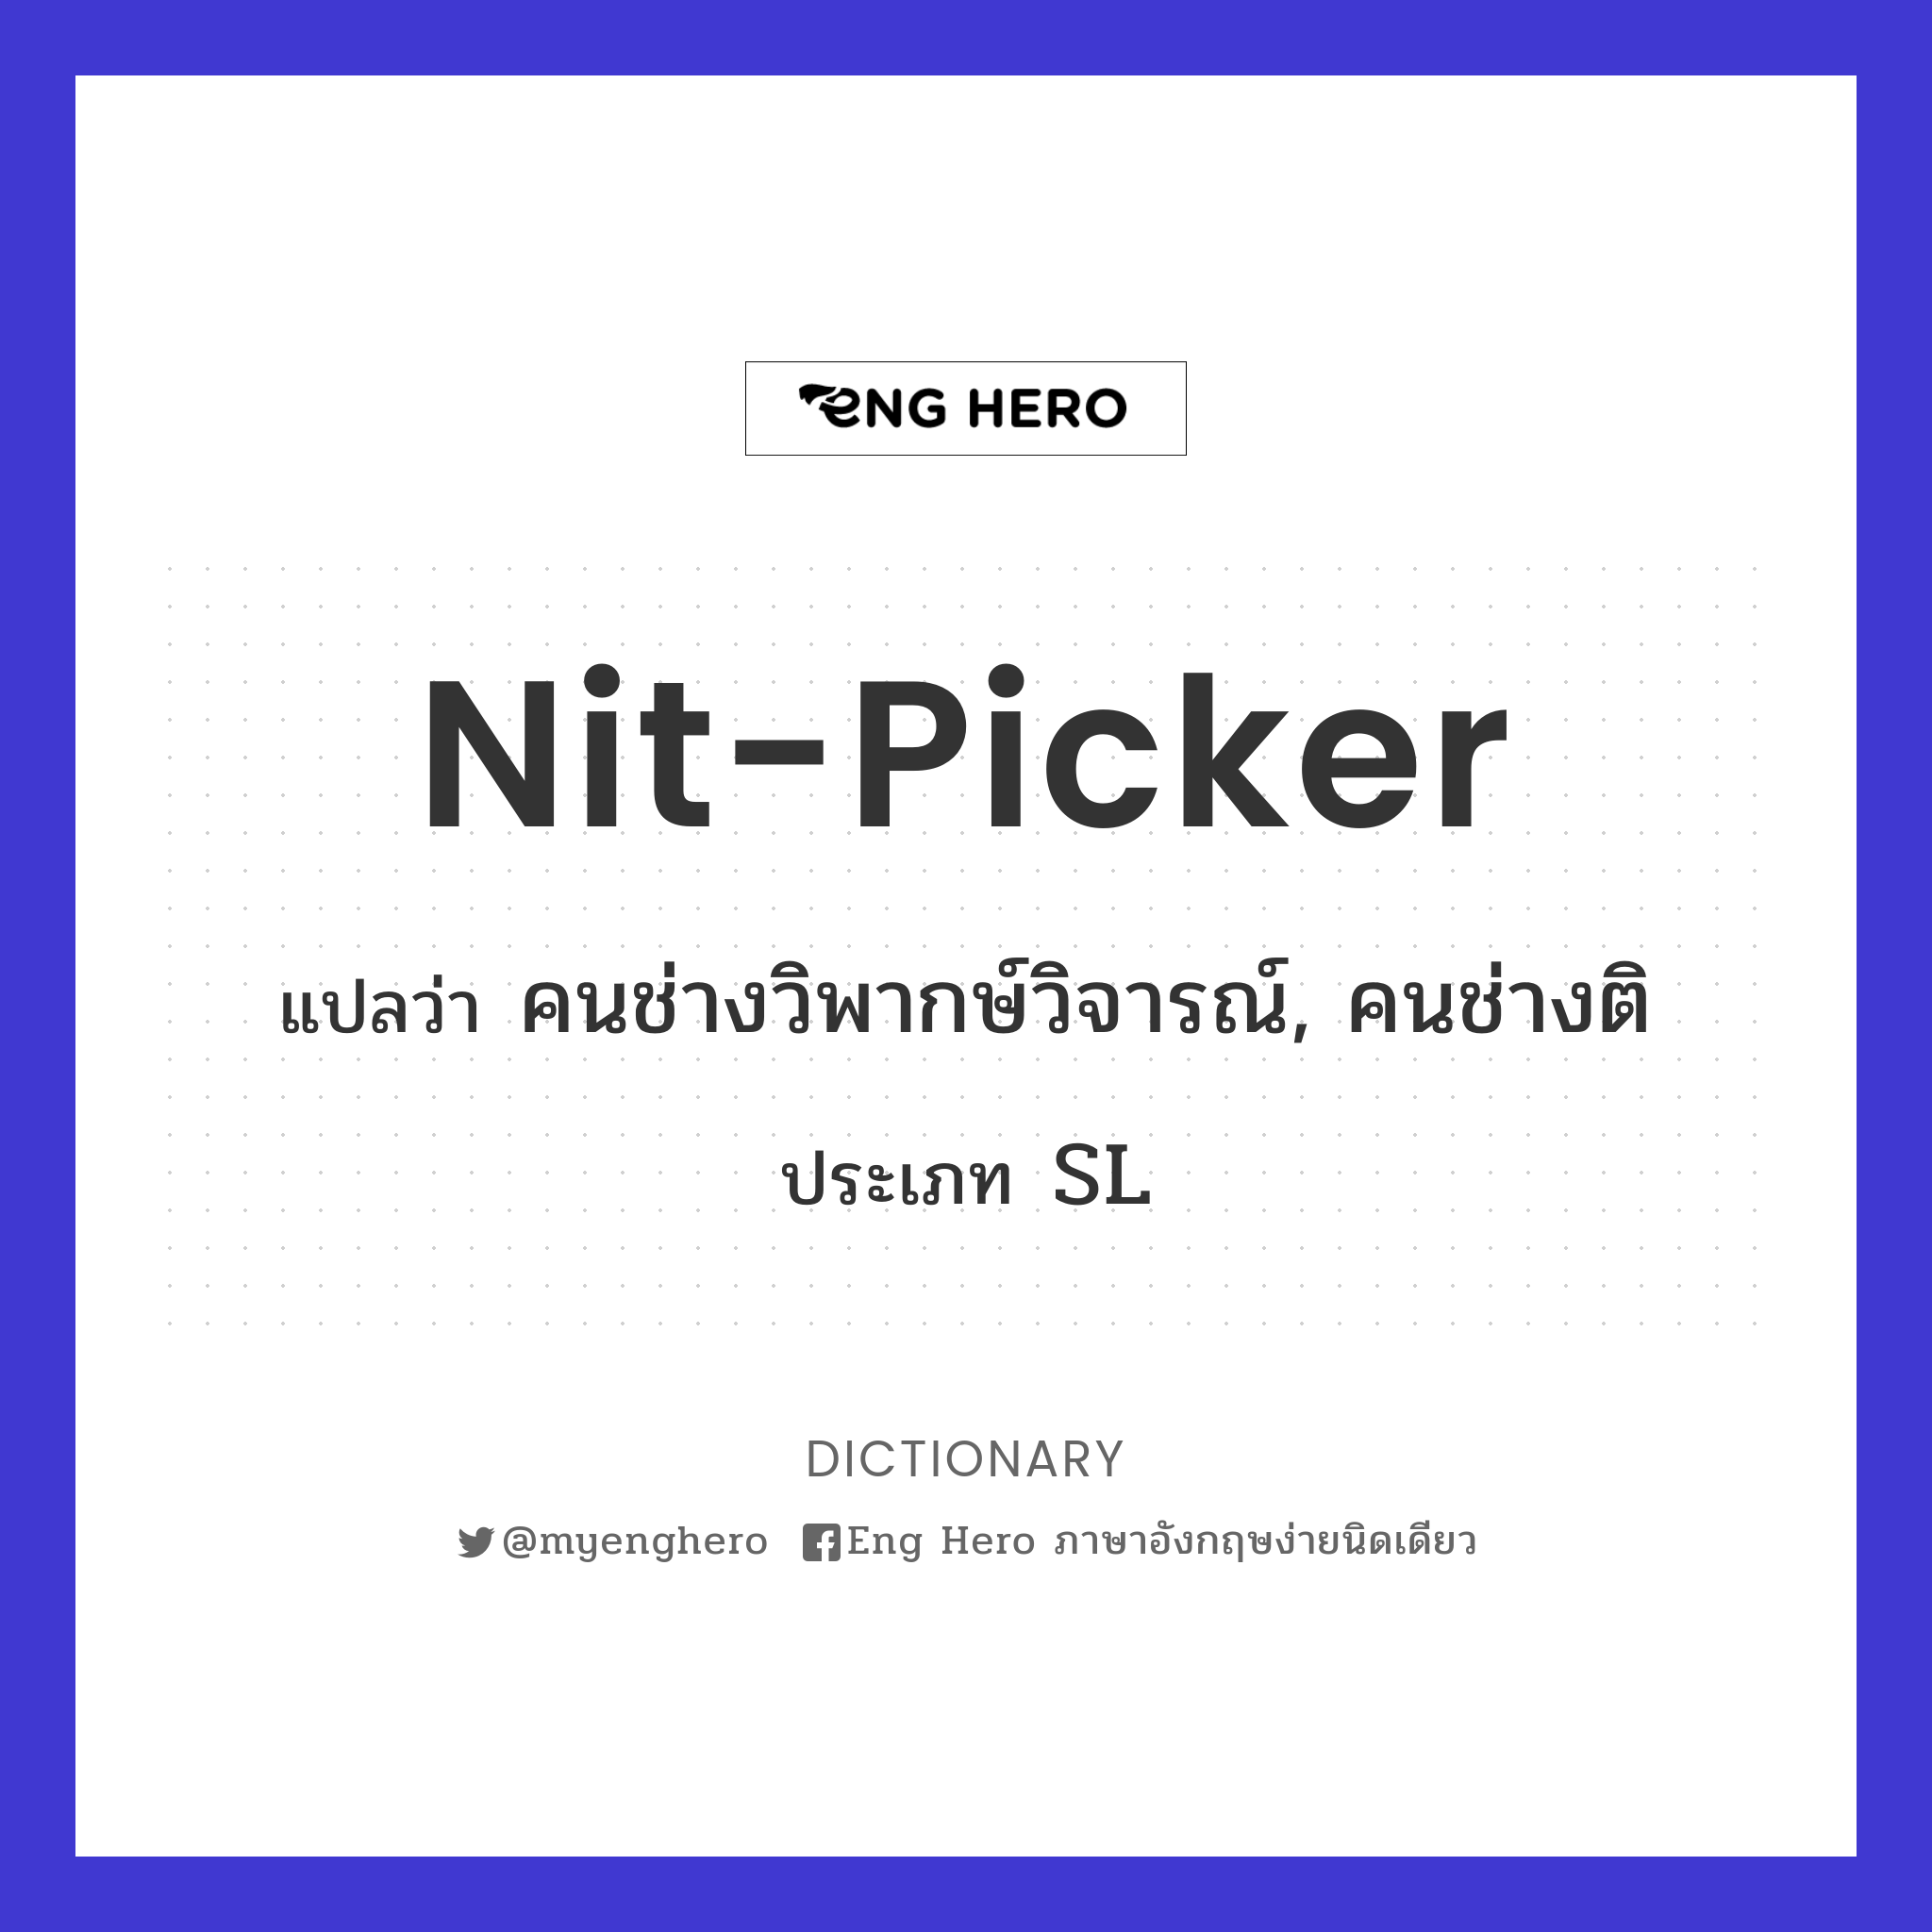 nit-picker